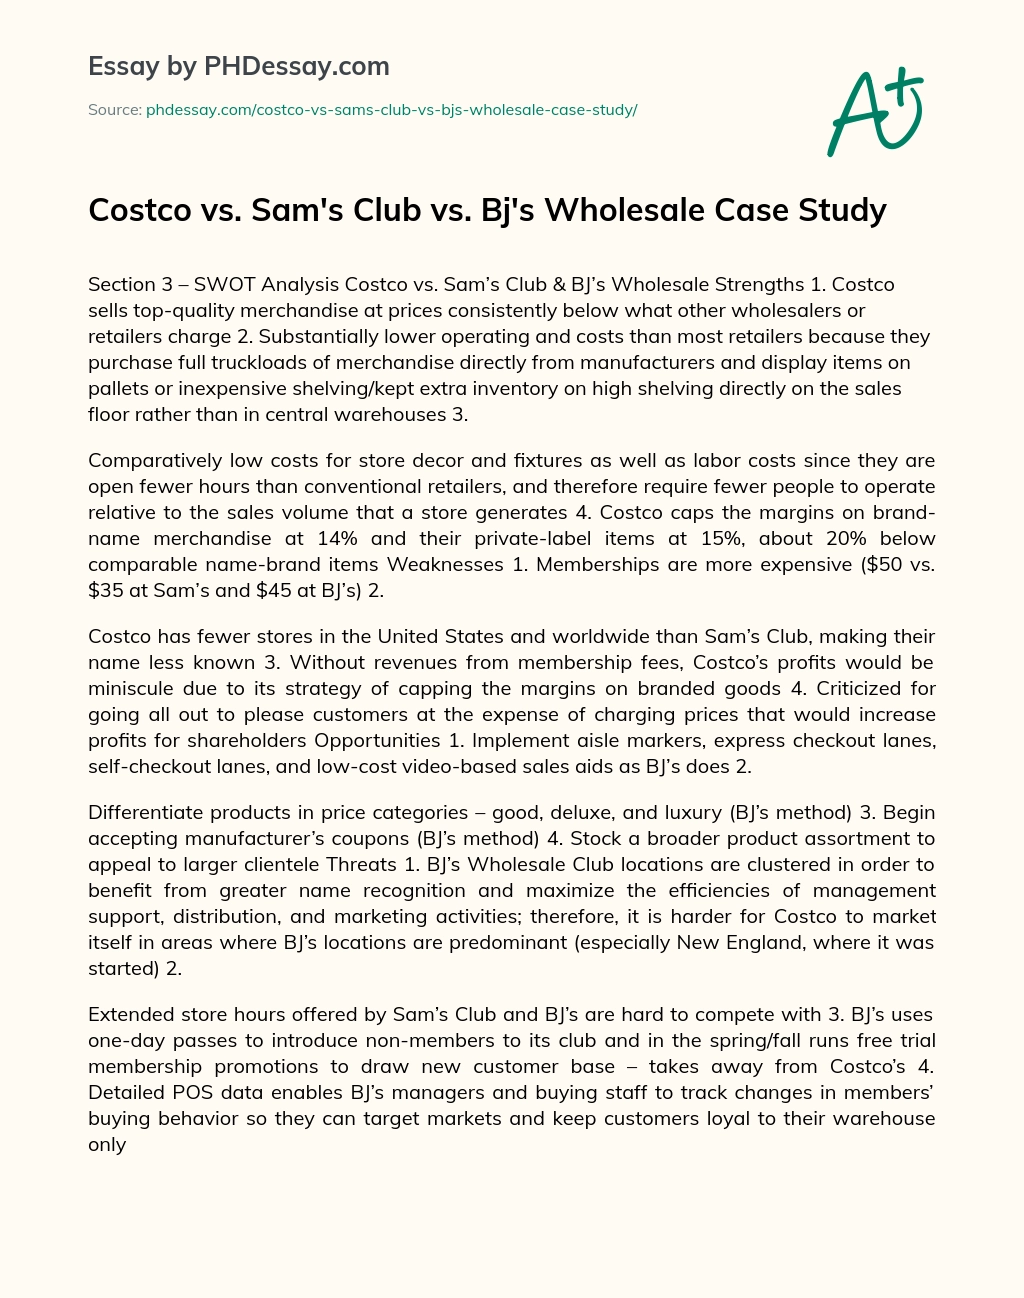 Costco vs. Sam’s Club vs. Bj’s Wholesale essay